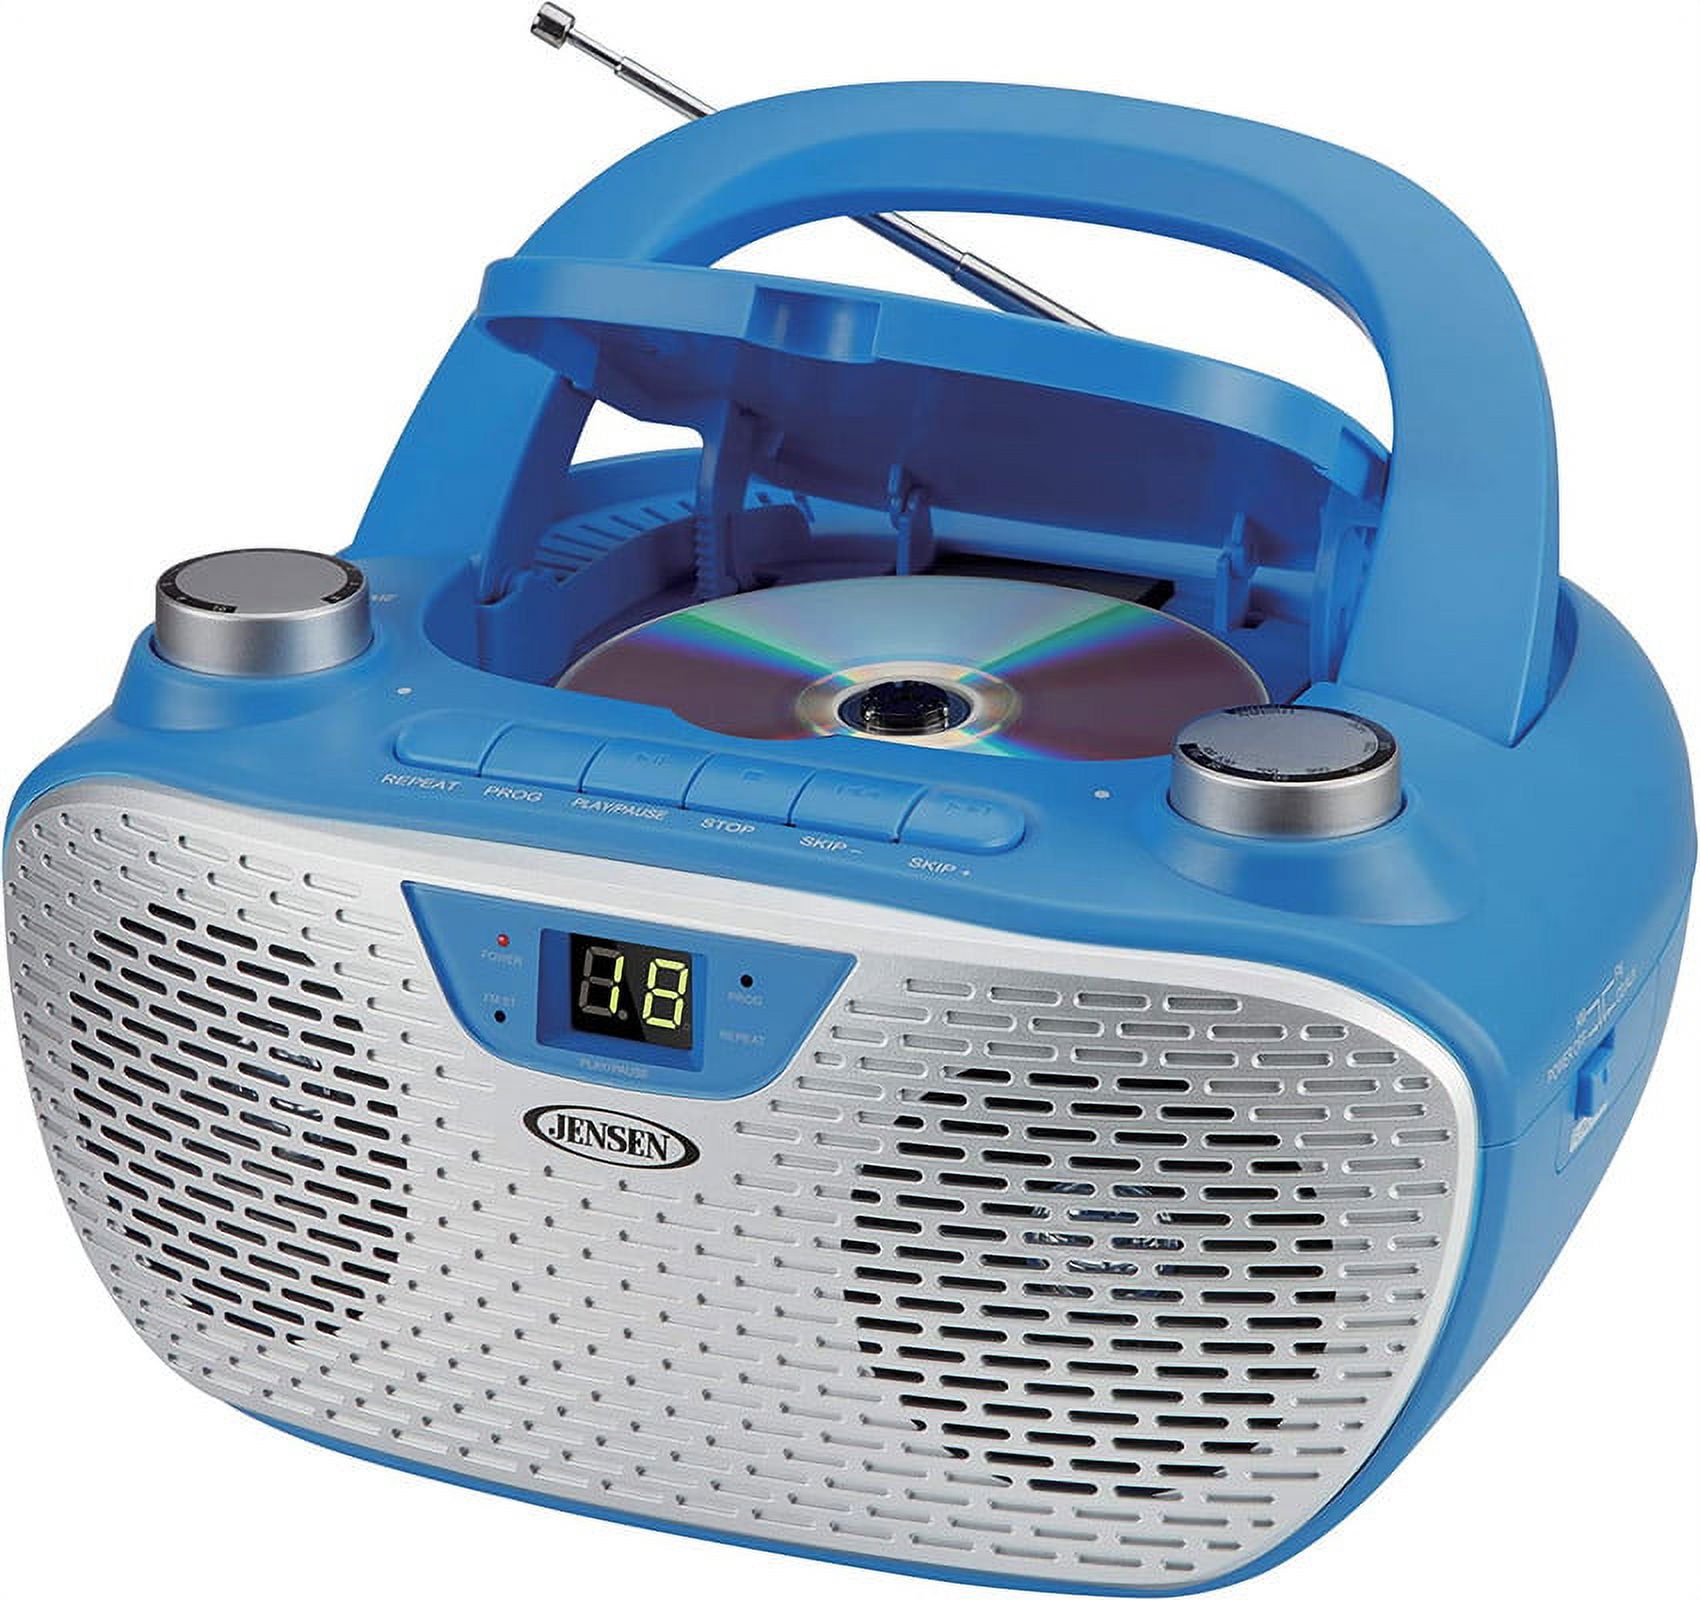 Jensen Bluetooth MP3 Boombox, Blue, CD-485-BL - image 3 of 3